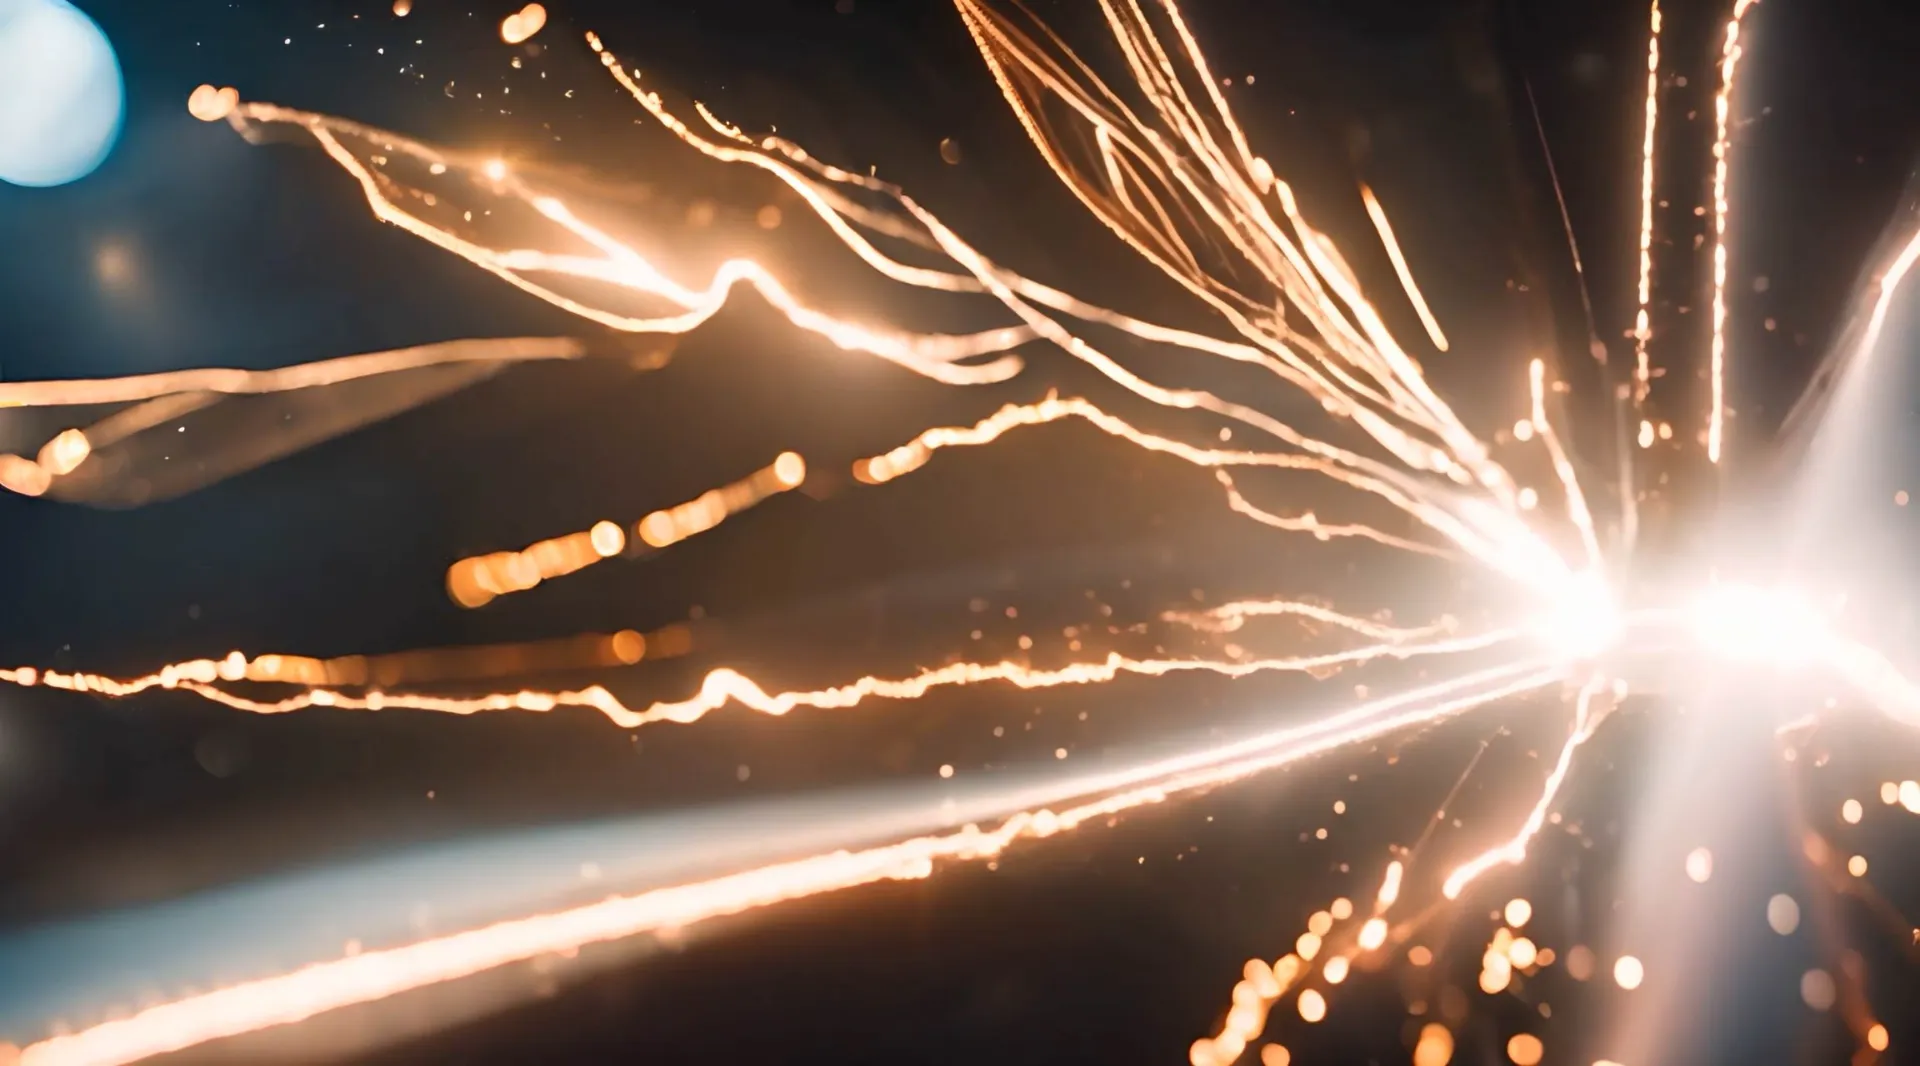 Energetic Spark Explosion in Glowing Warm Tones Motion Video